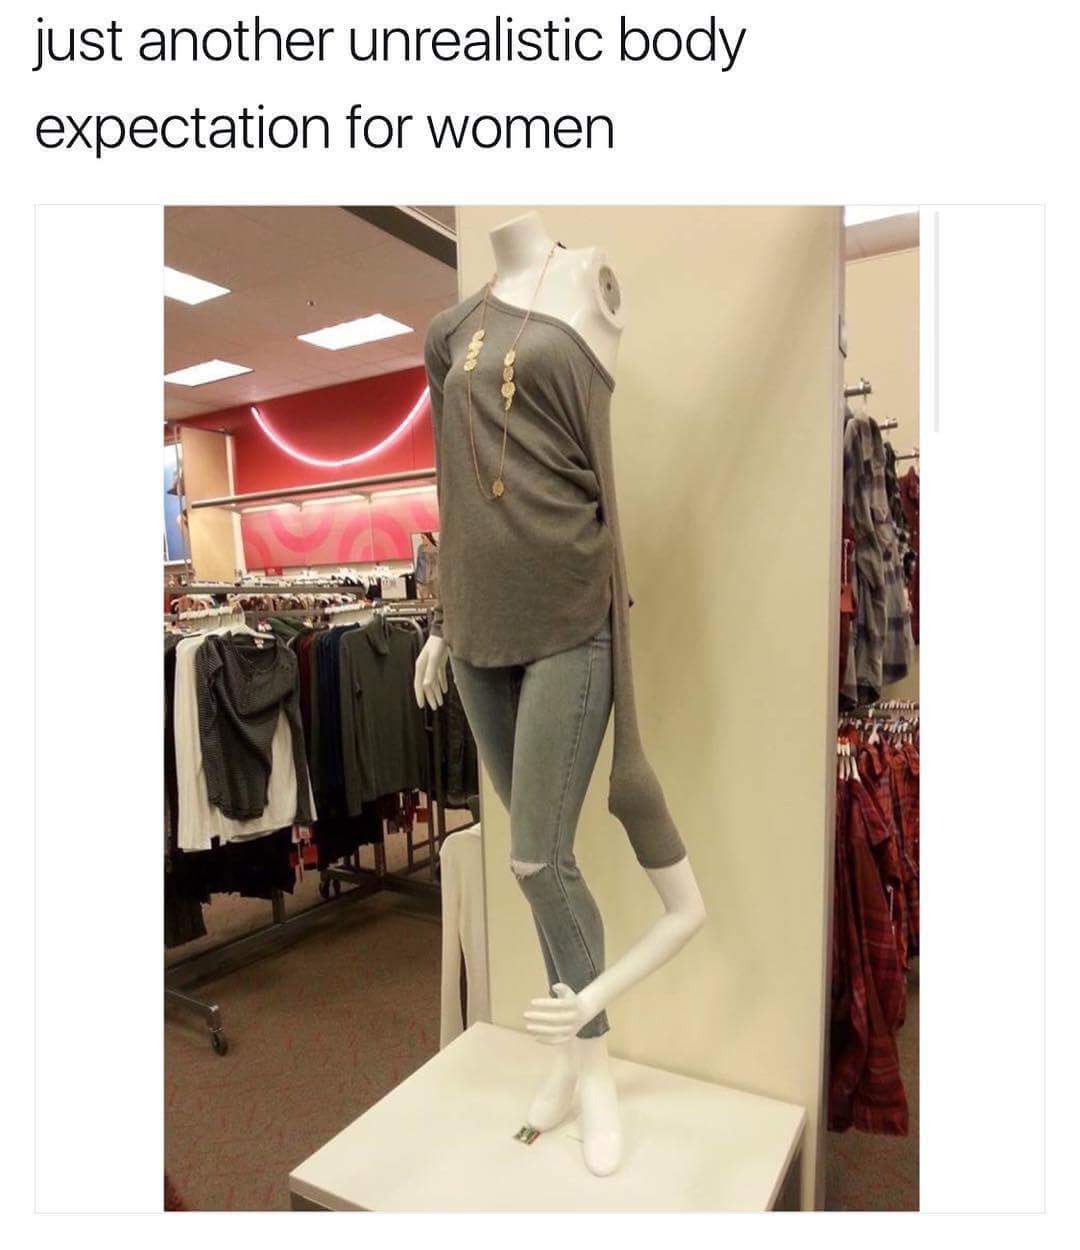 meme stream - unrealistic body expectations meme - just another unrealistic body expectation for women